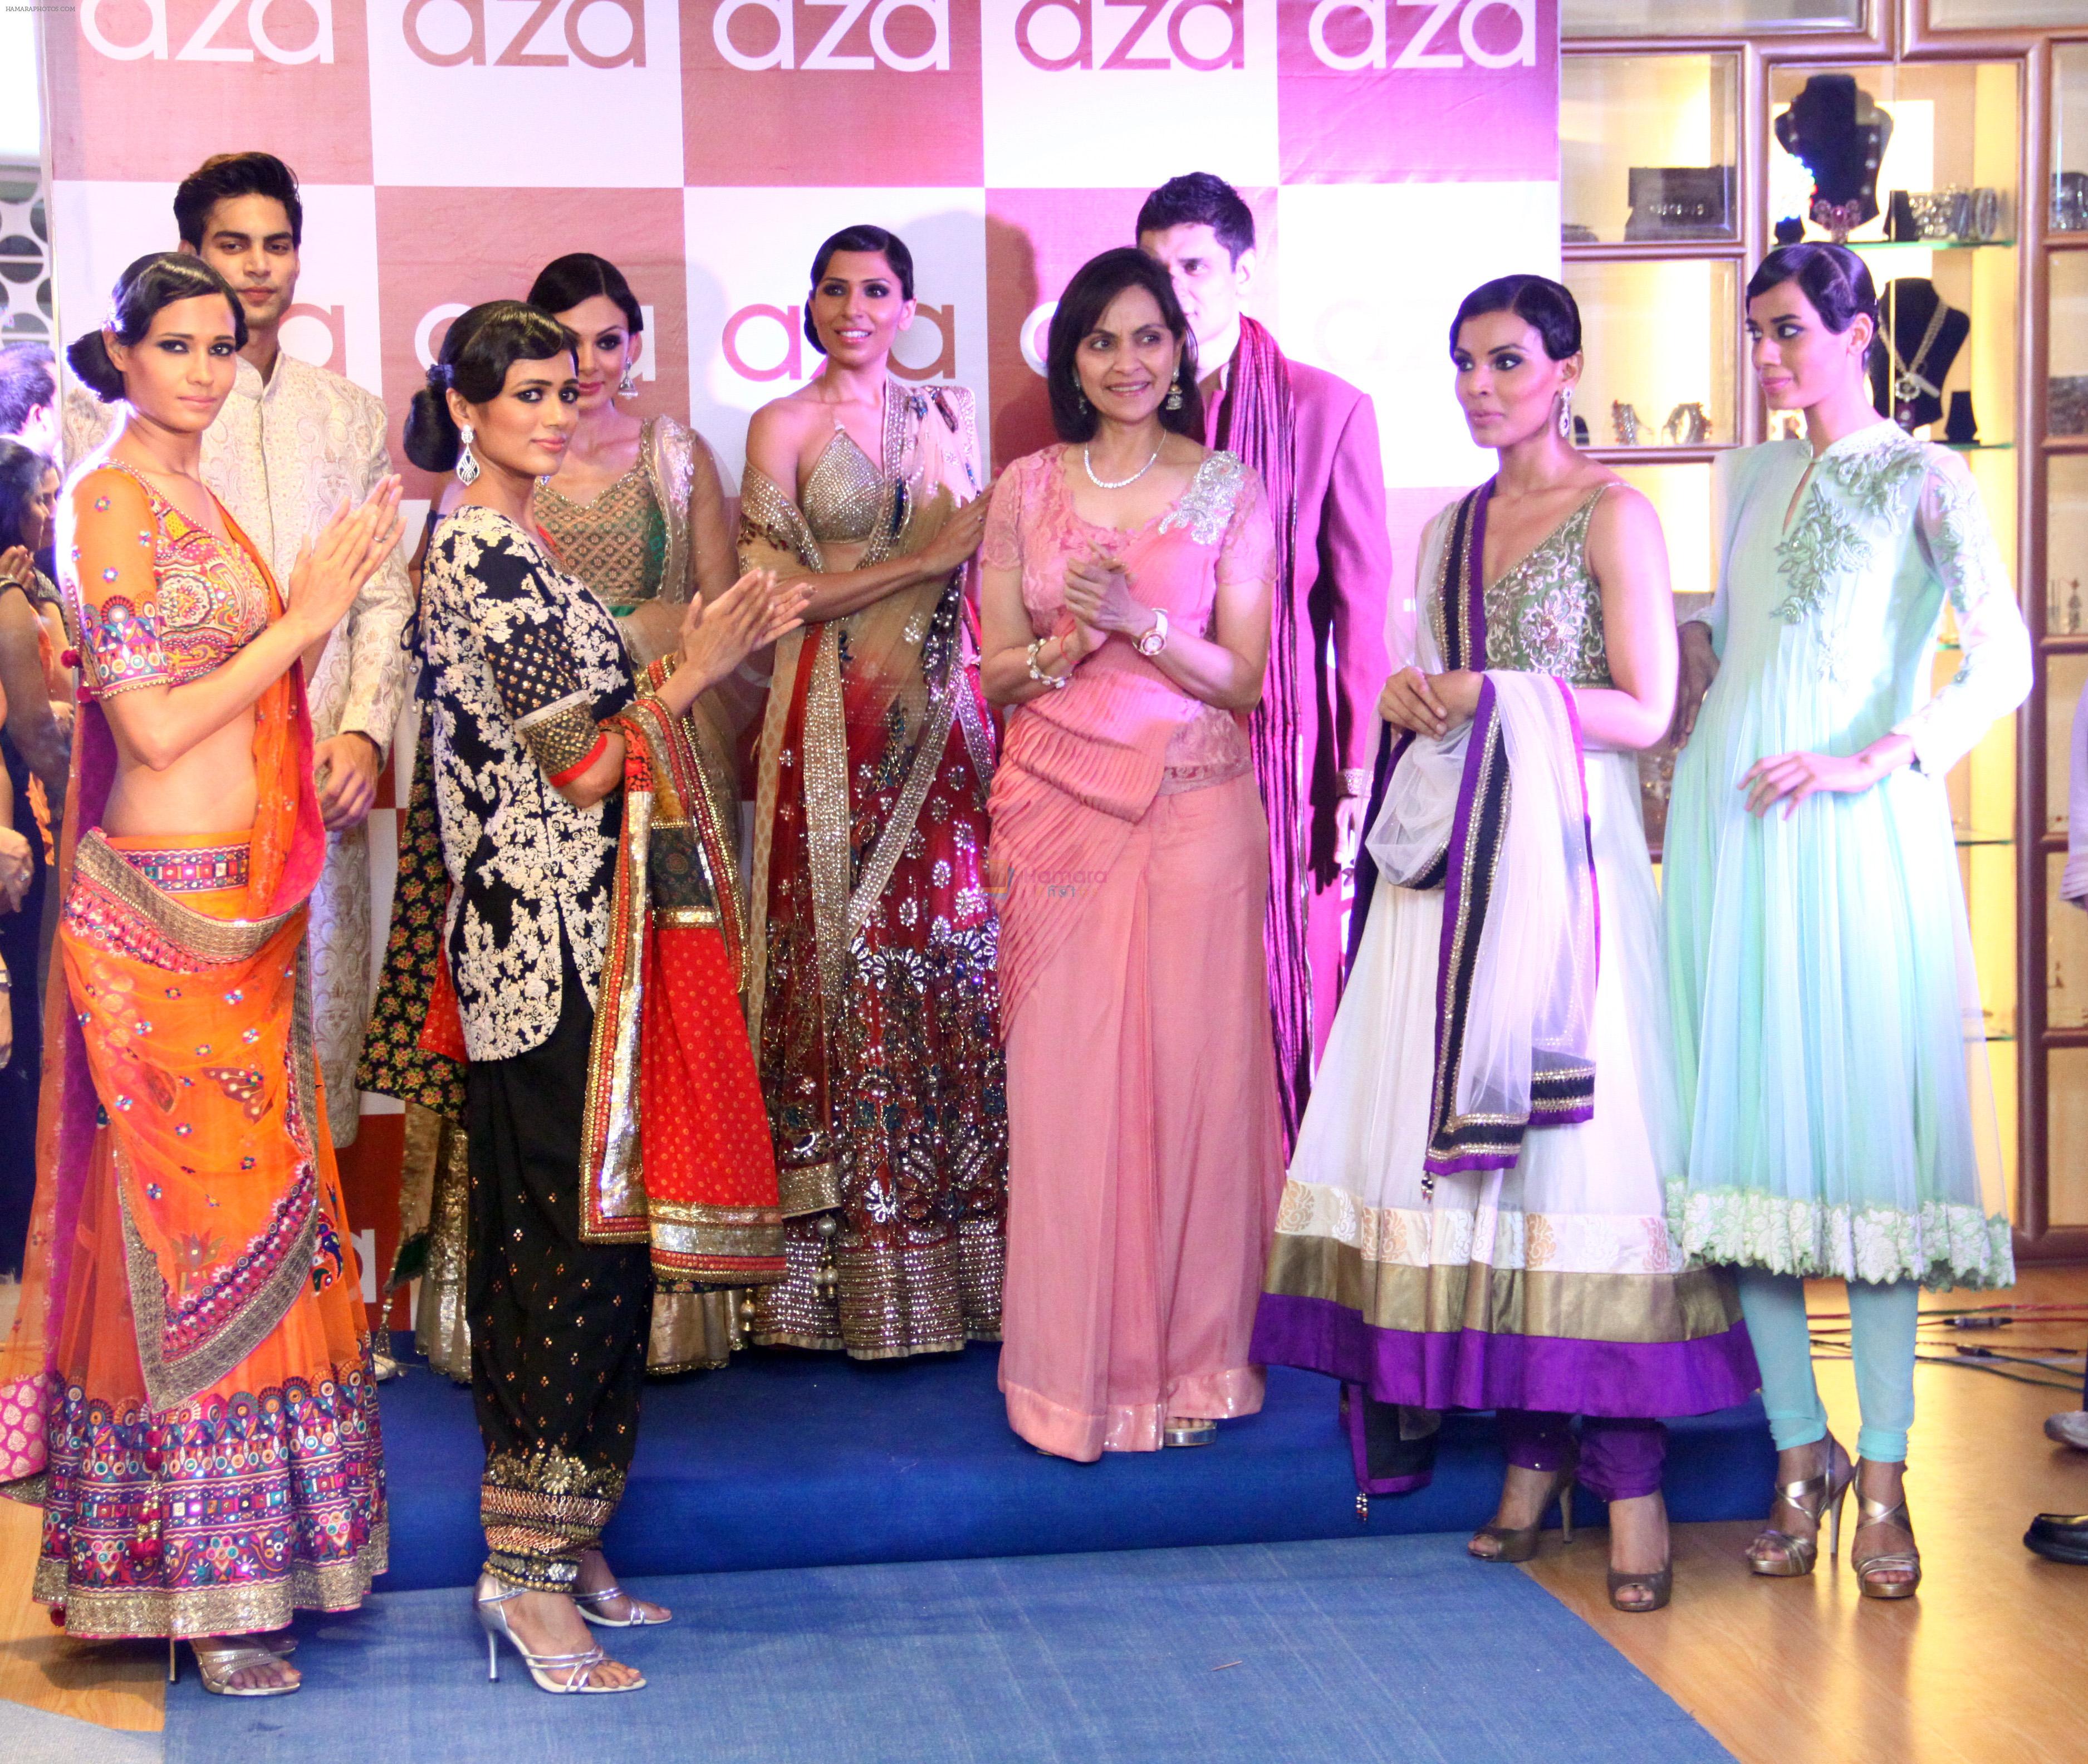 Alka Nishar at the Aza store launch in Ludhiana on 18th May 2012